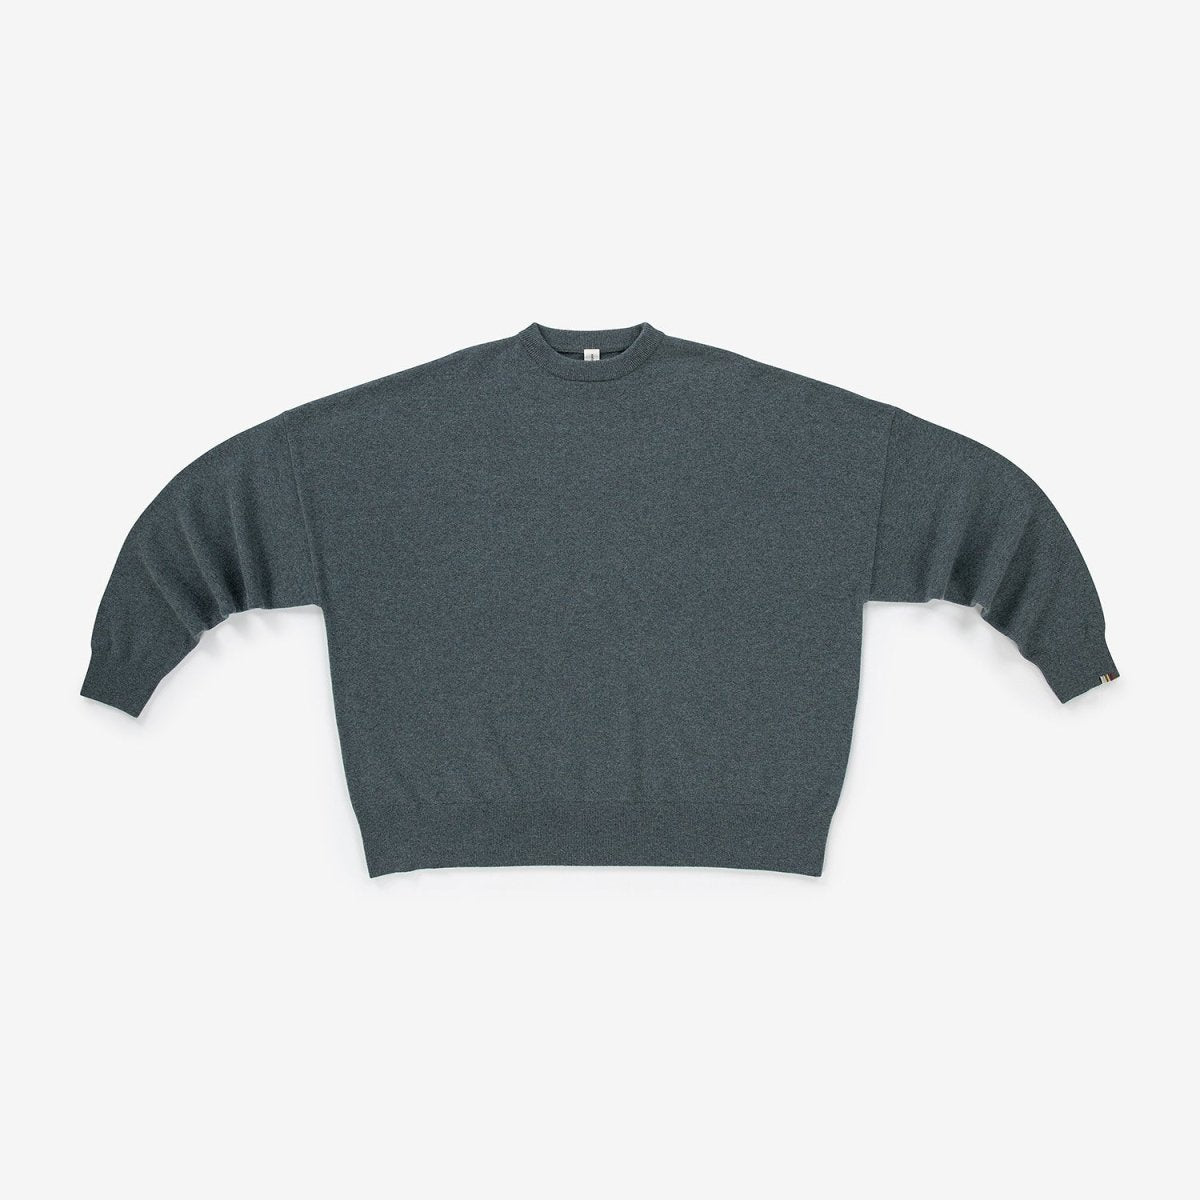 extreme cashmere oversized sweater n°246 juna